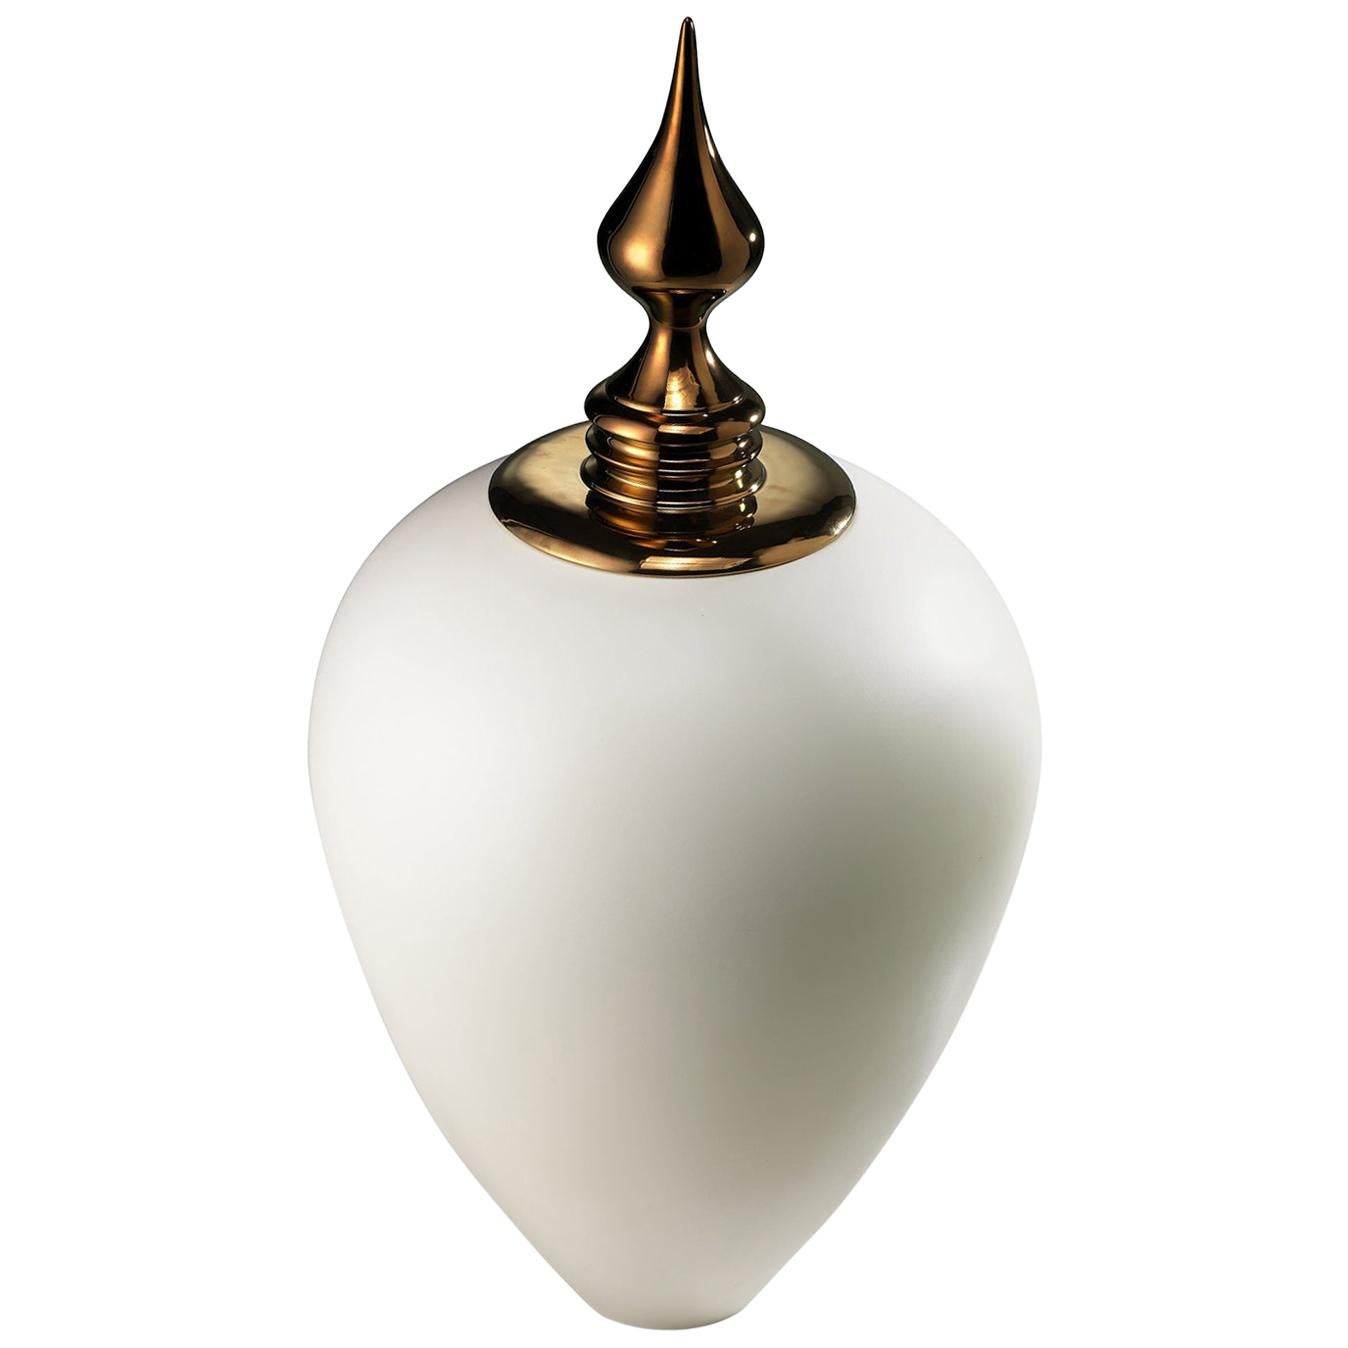 Ceramic Vase "NADIRA" White Glazed with Bronze Top by Gabriella B. Made in Italy